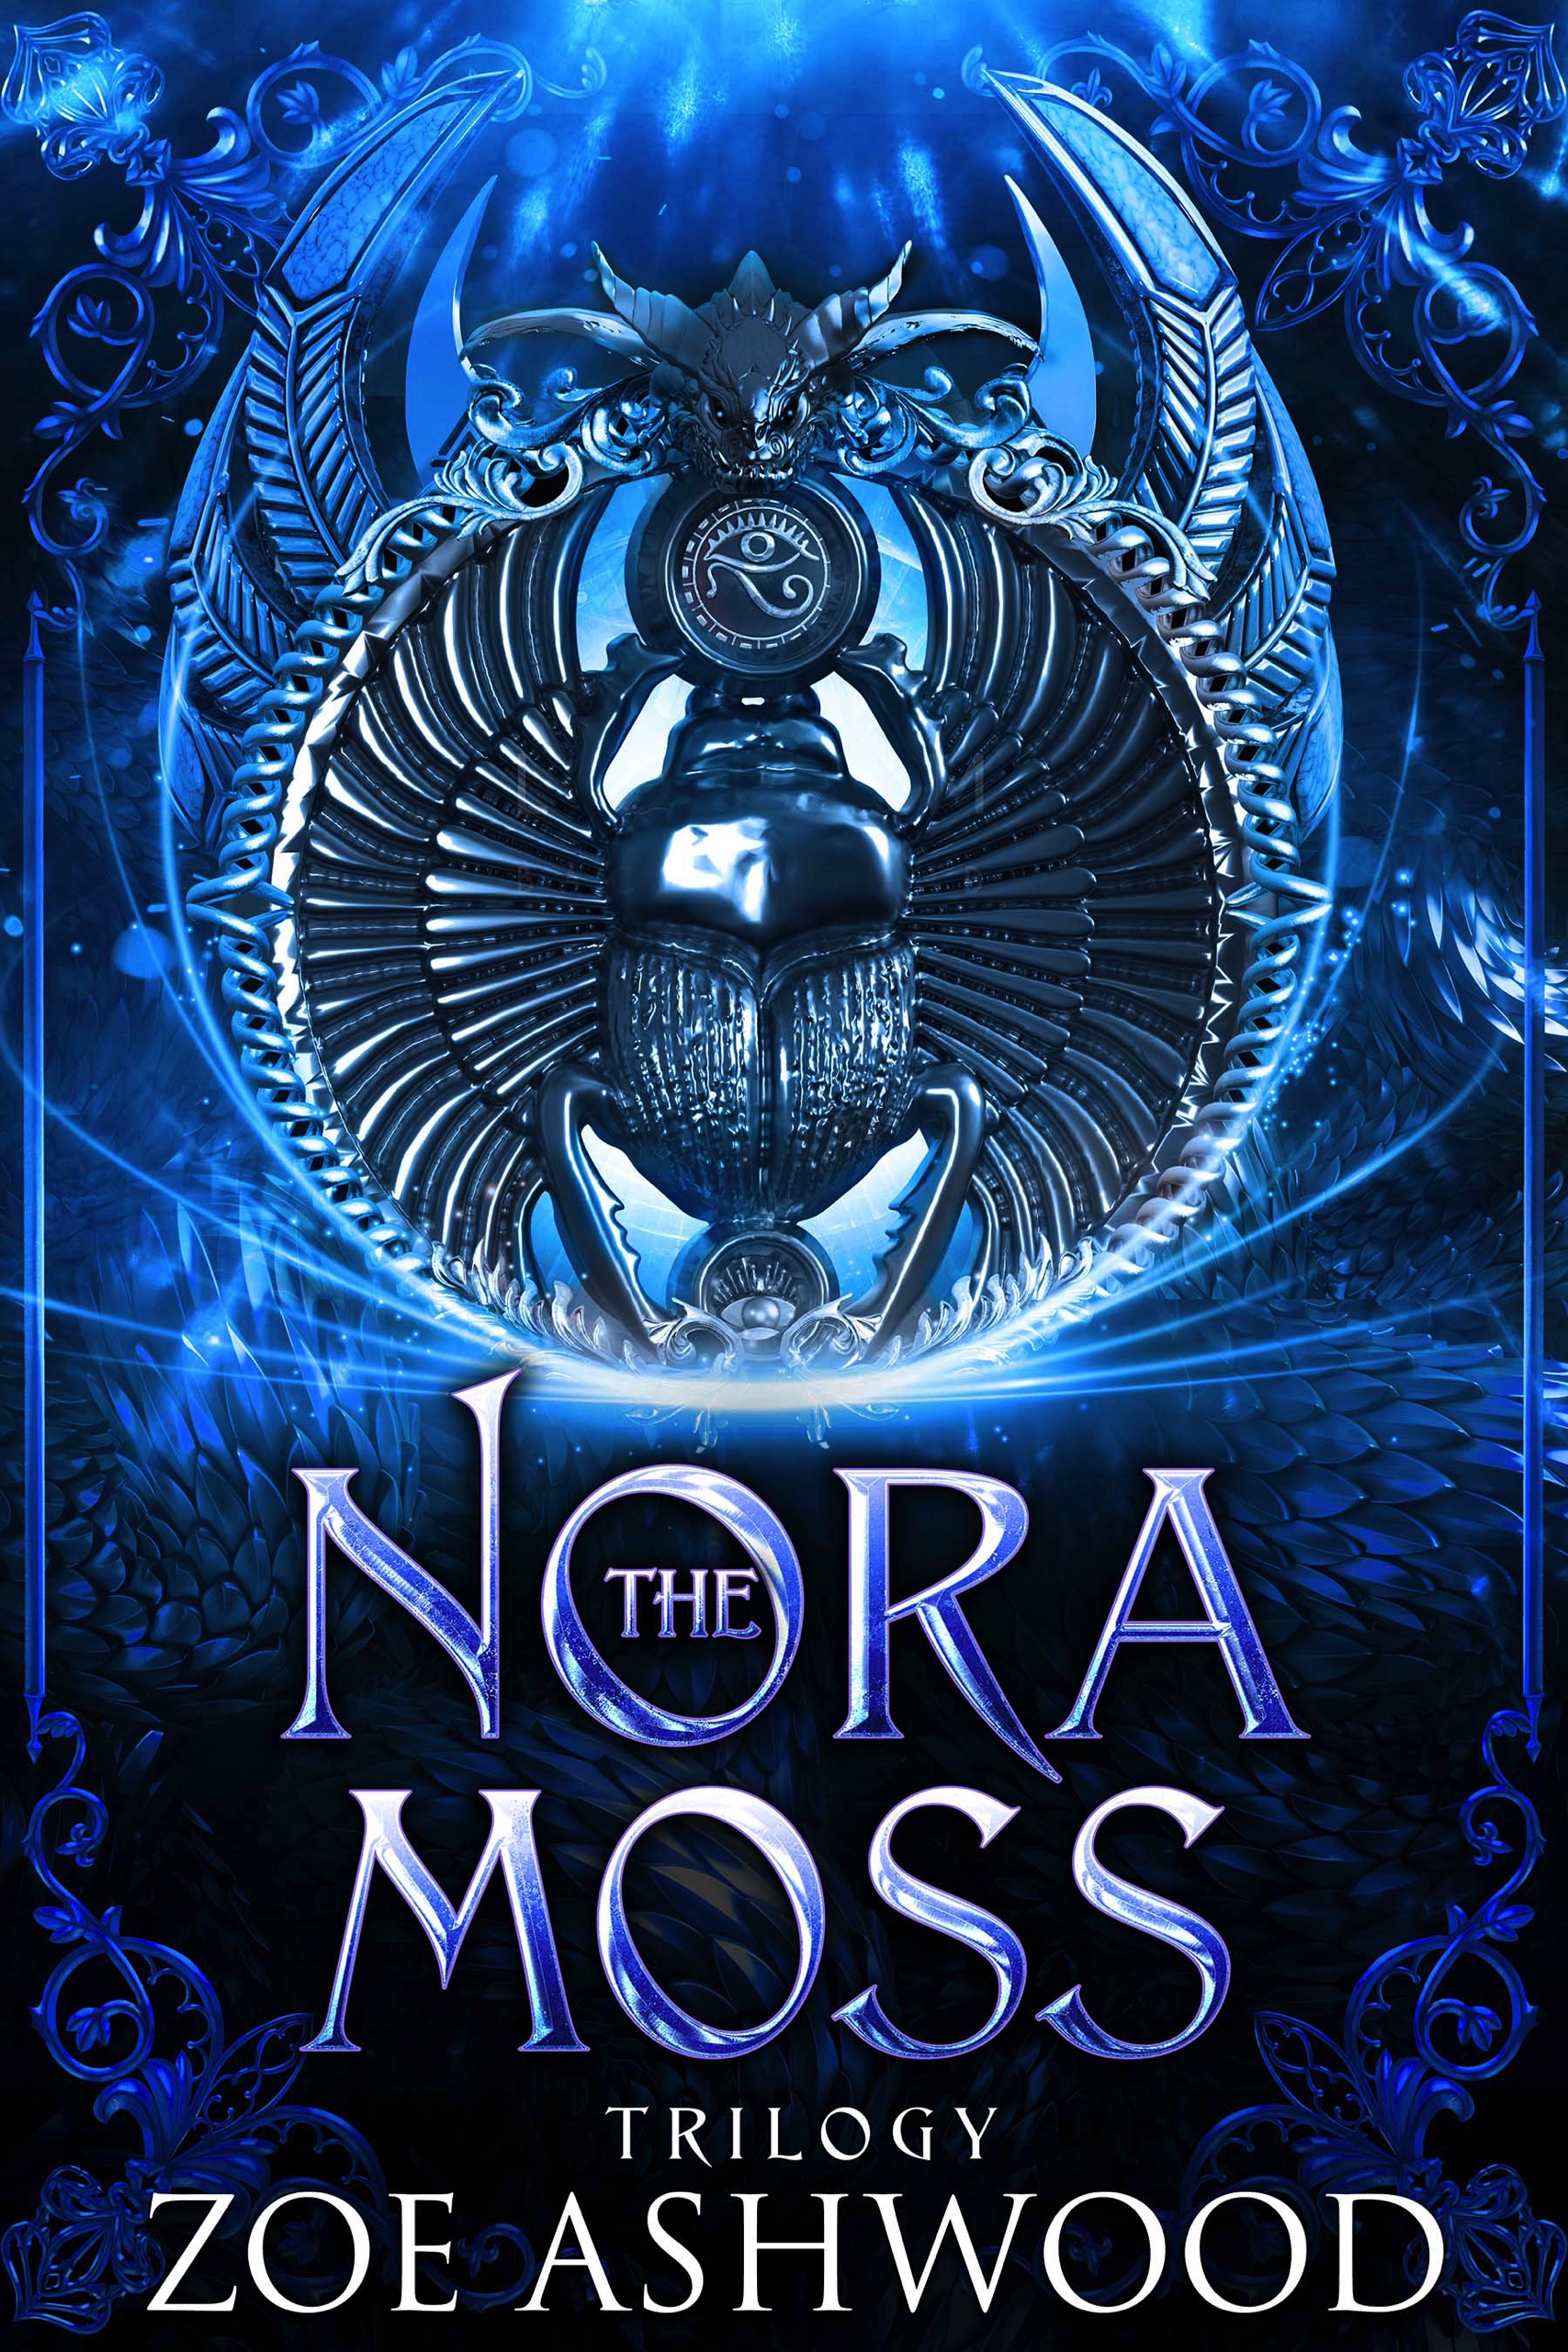 The Nora Moss Trilogy by Zoe Ashwood